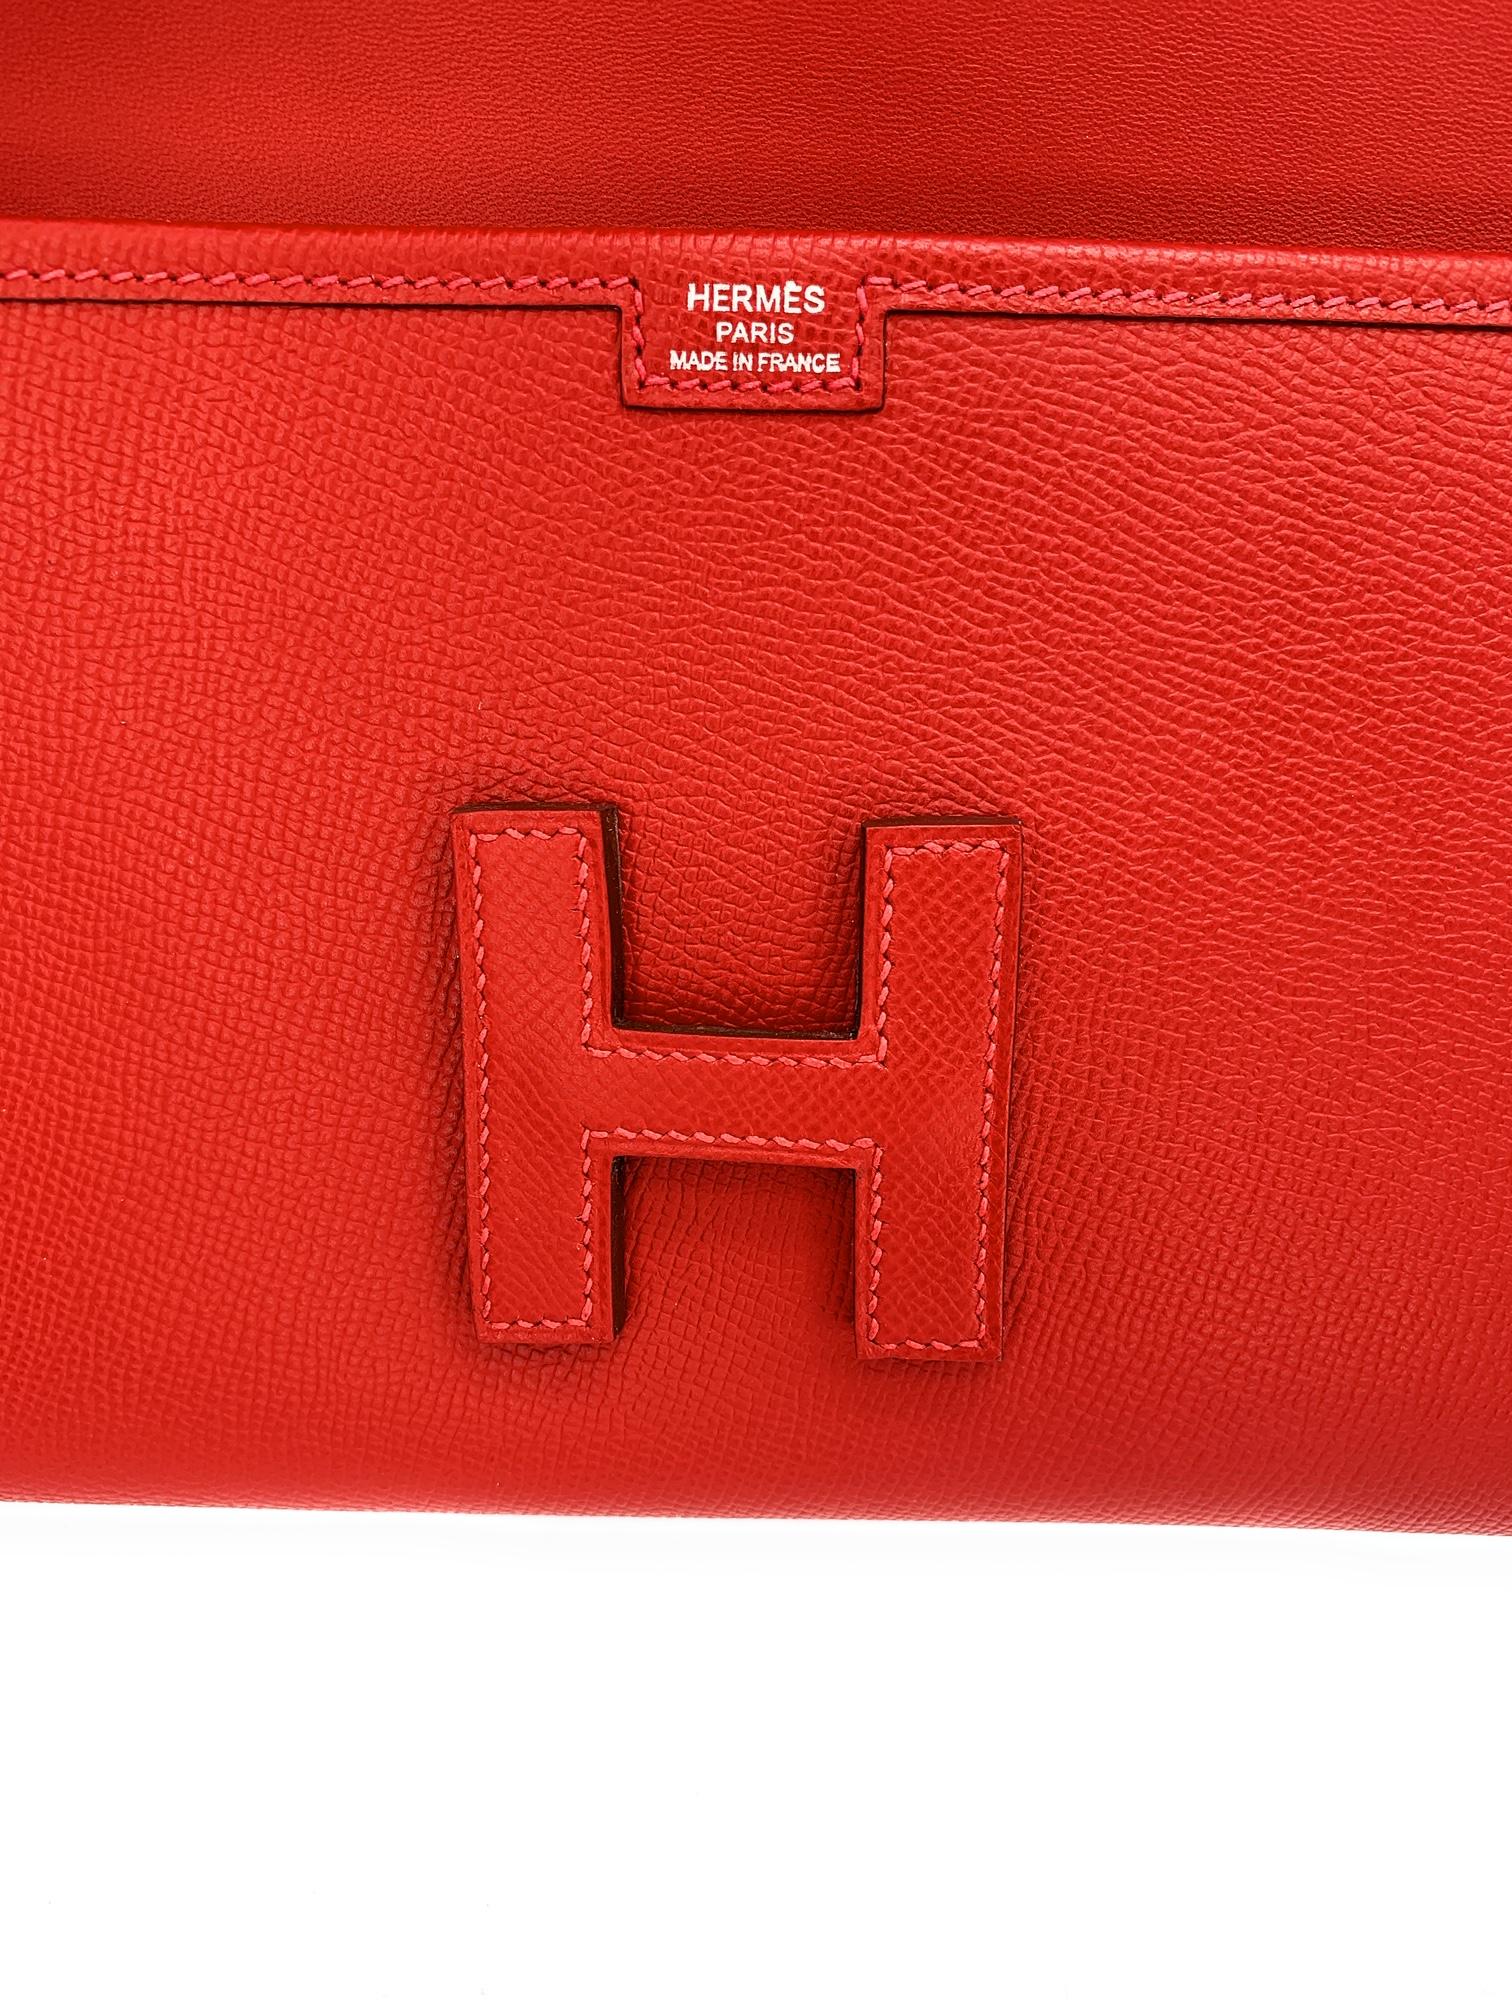 Hermès Jige Elan 29 Red Epsom Leather Clutch 2